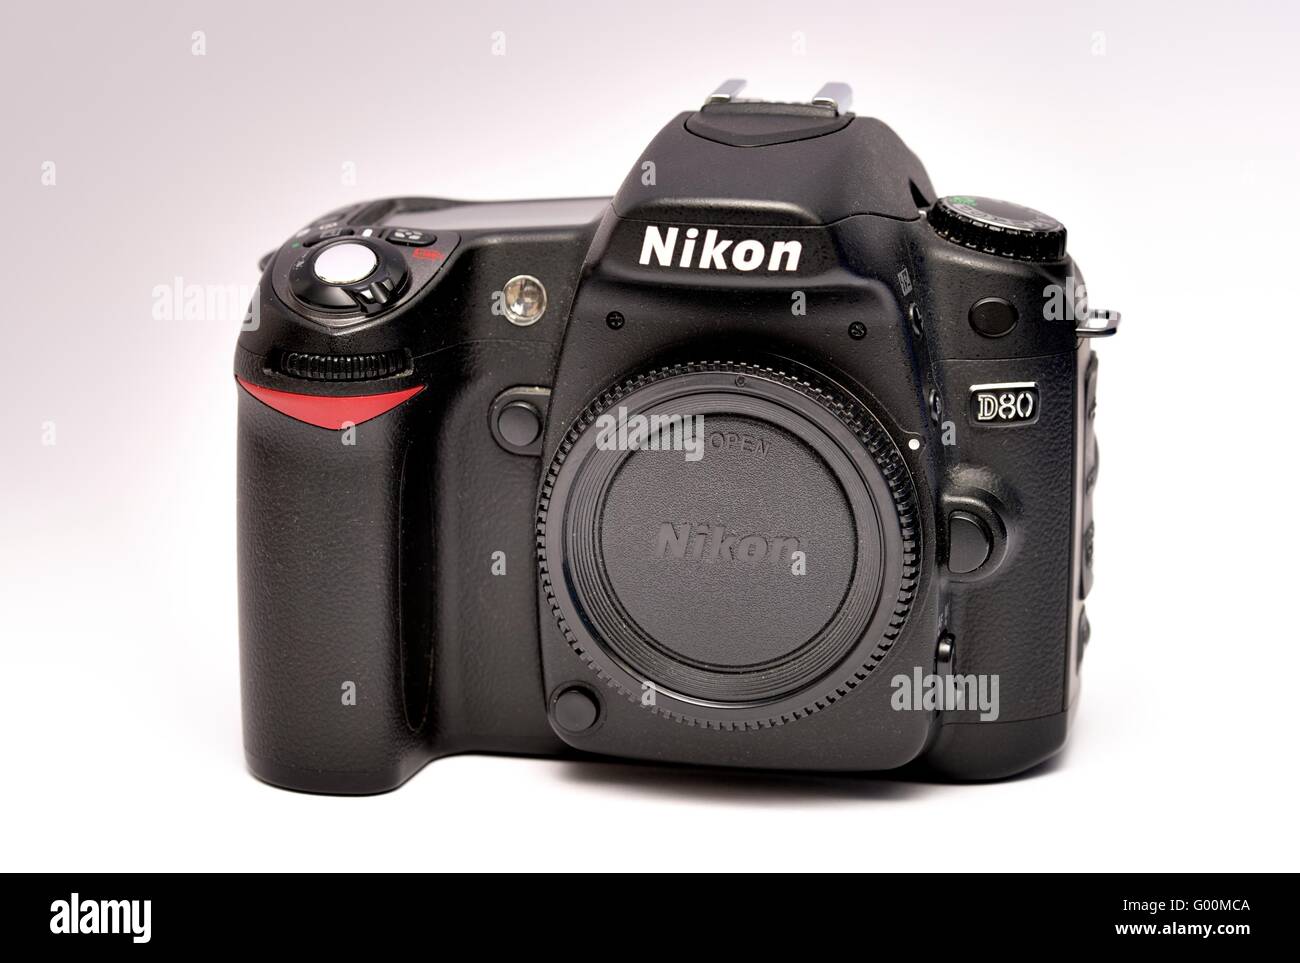 Nikon d80 fotografías e imágenes de alta resolución - Alamy